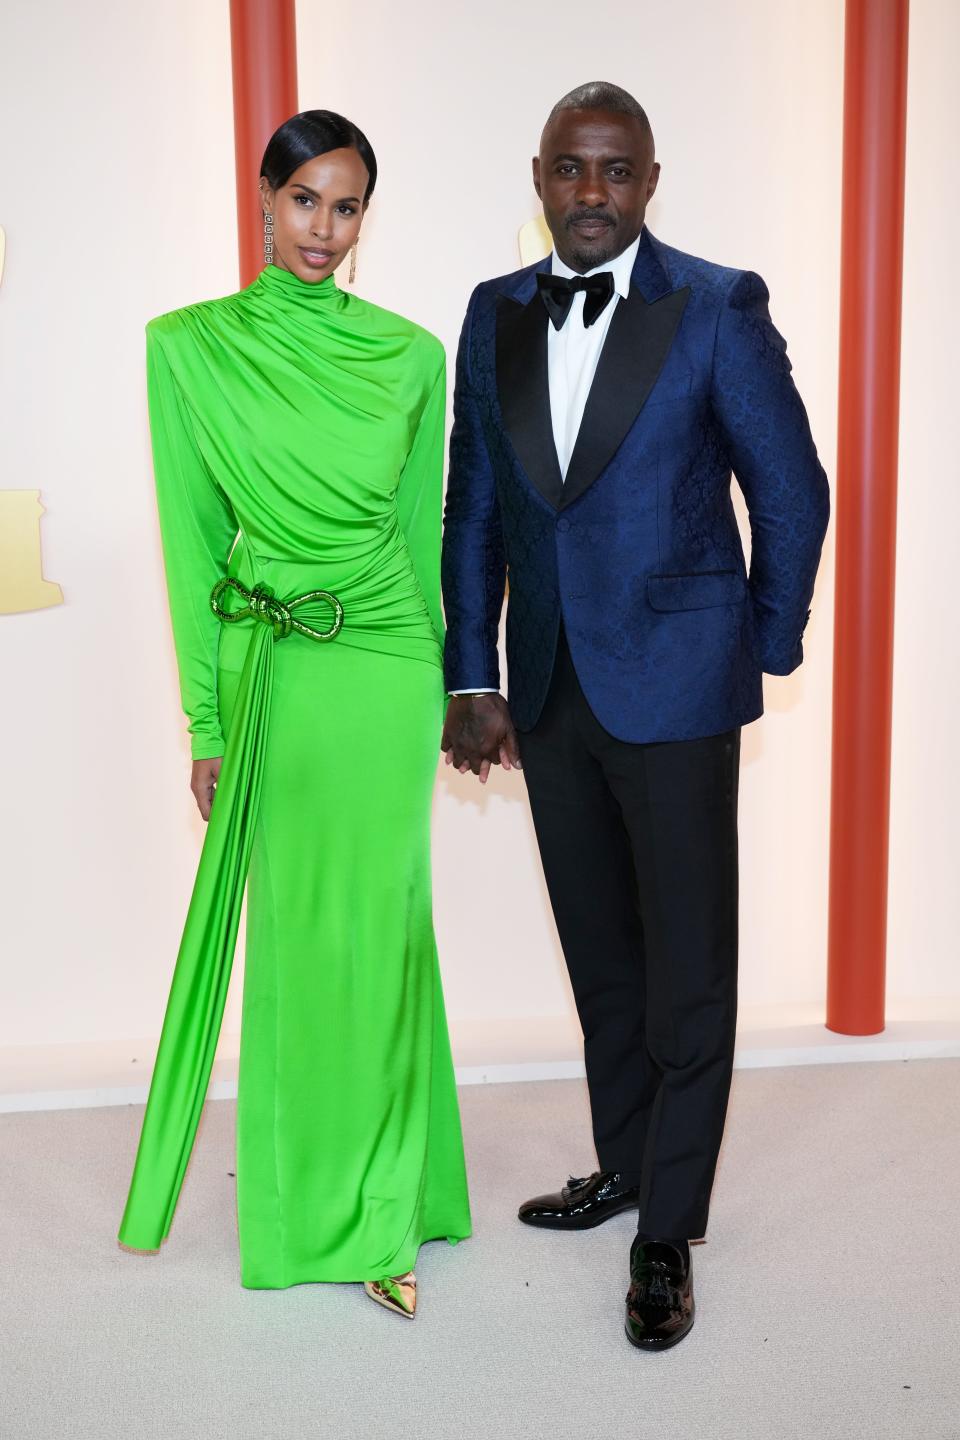 Sabrina Dhowre Elba and Idris Elba attend the 2023 Academy Awards.